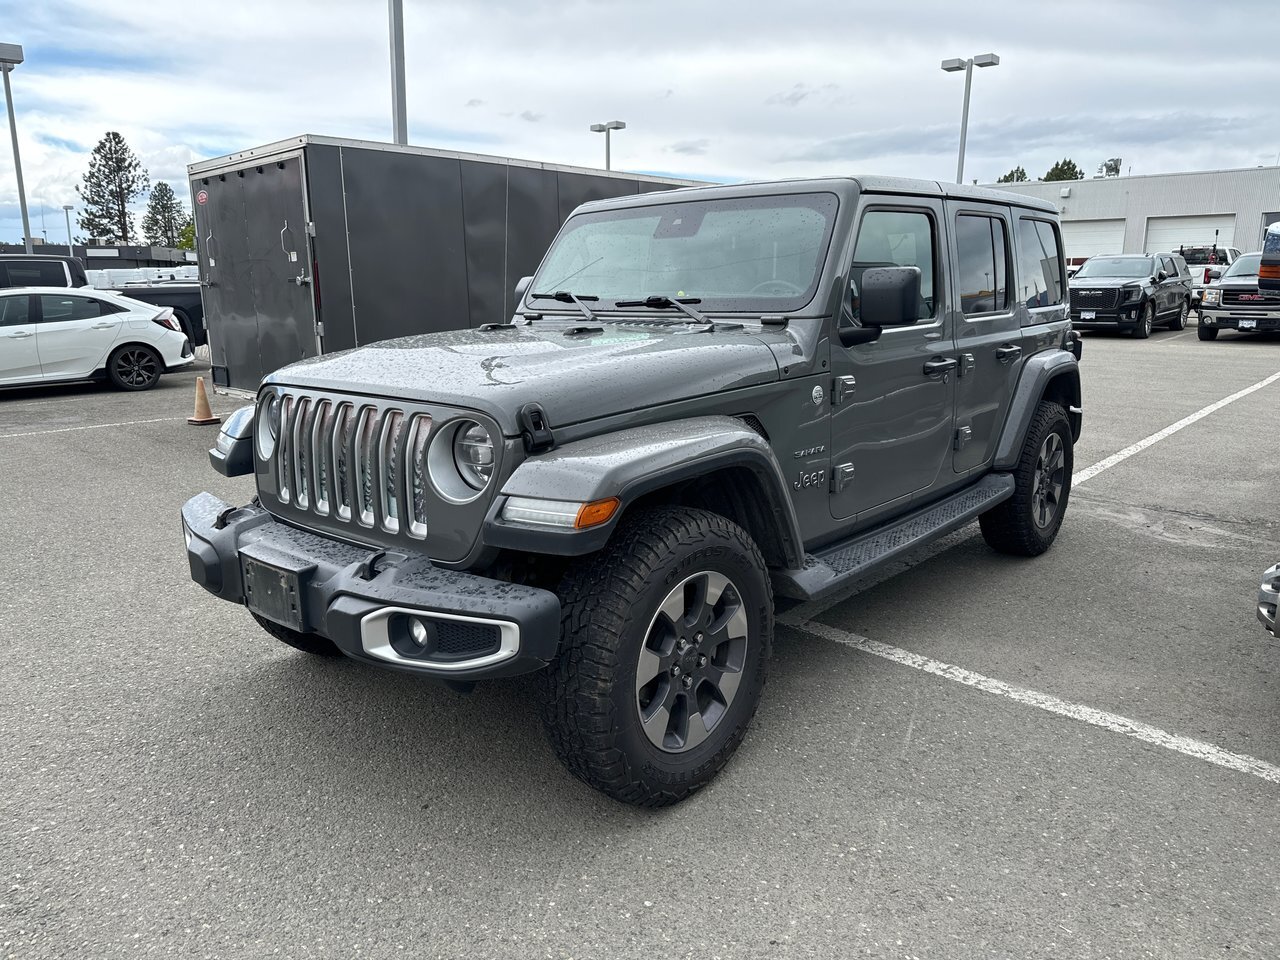 2019 Jeep Wrangler Jl Unlimited Sahara Full Photoshoot Coming Soon!